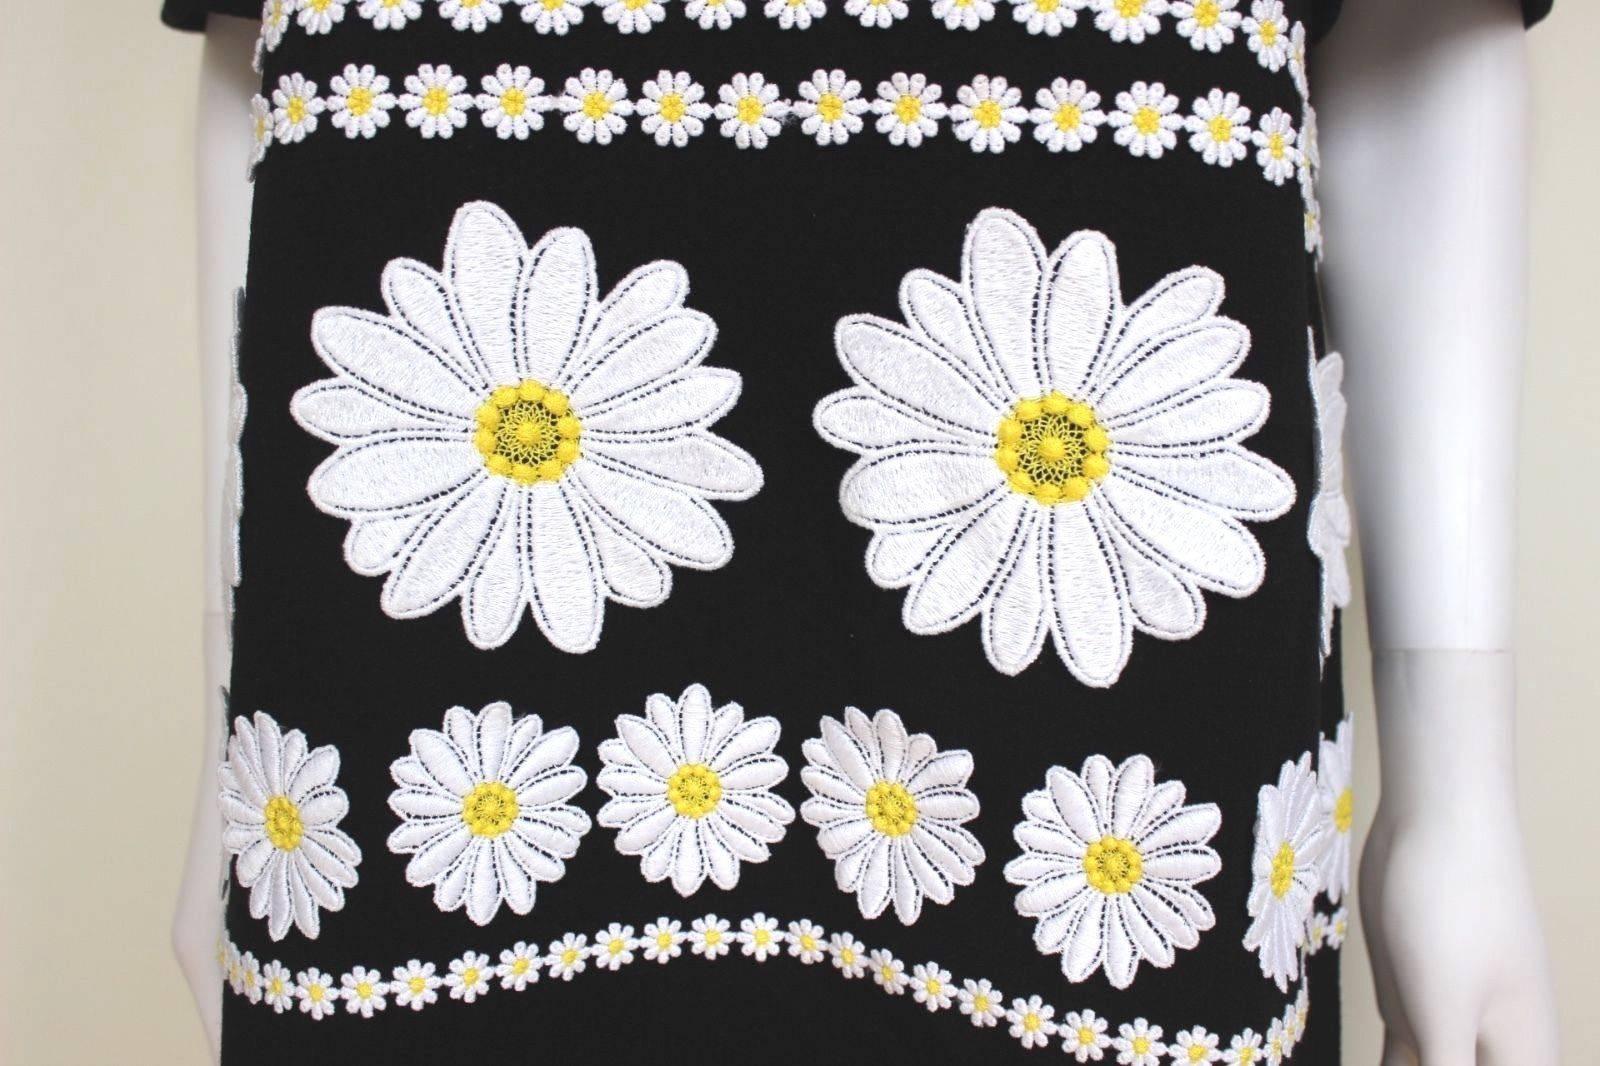 DOLCE & GABBANA 2016 Daisy Shift Dress It 44 Uk 12 
Black embroidered daisy dress from Dolce & Gabbana featuring a round neck, short sleeves, a rear zip fastening, loose waist and a short length.
Wool blend
Lining Composition:
Silk 94%